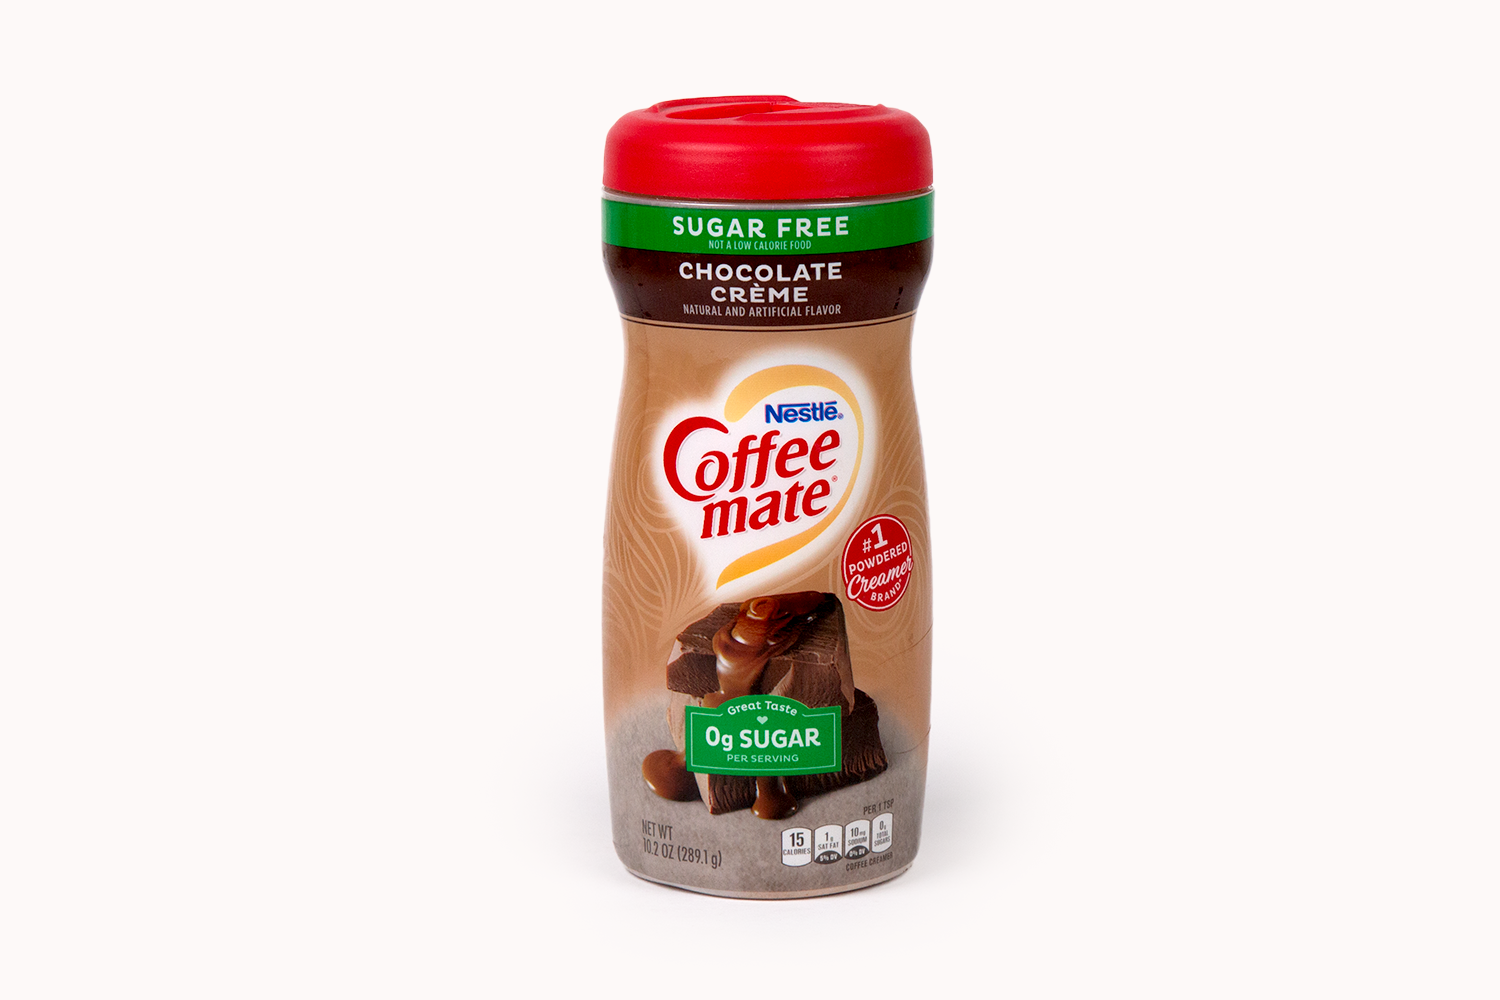 Nestle Coffee Mate Sugar Free Chocolate Crème